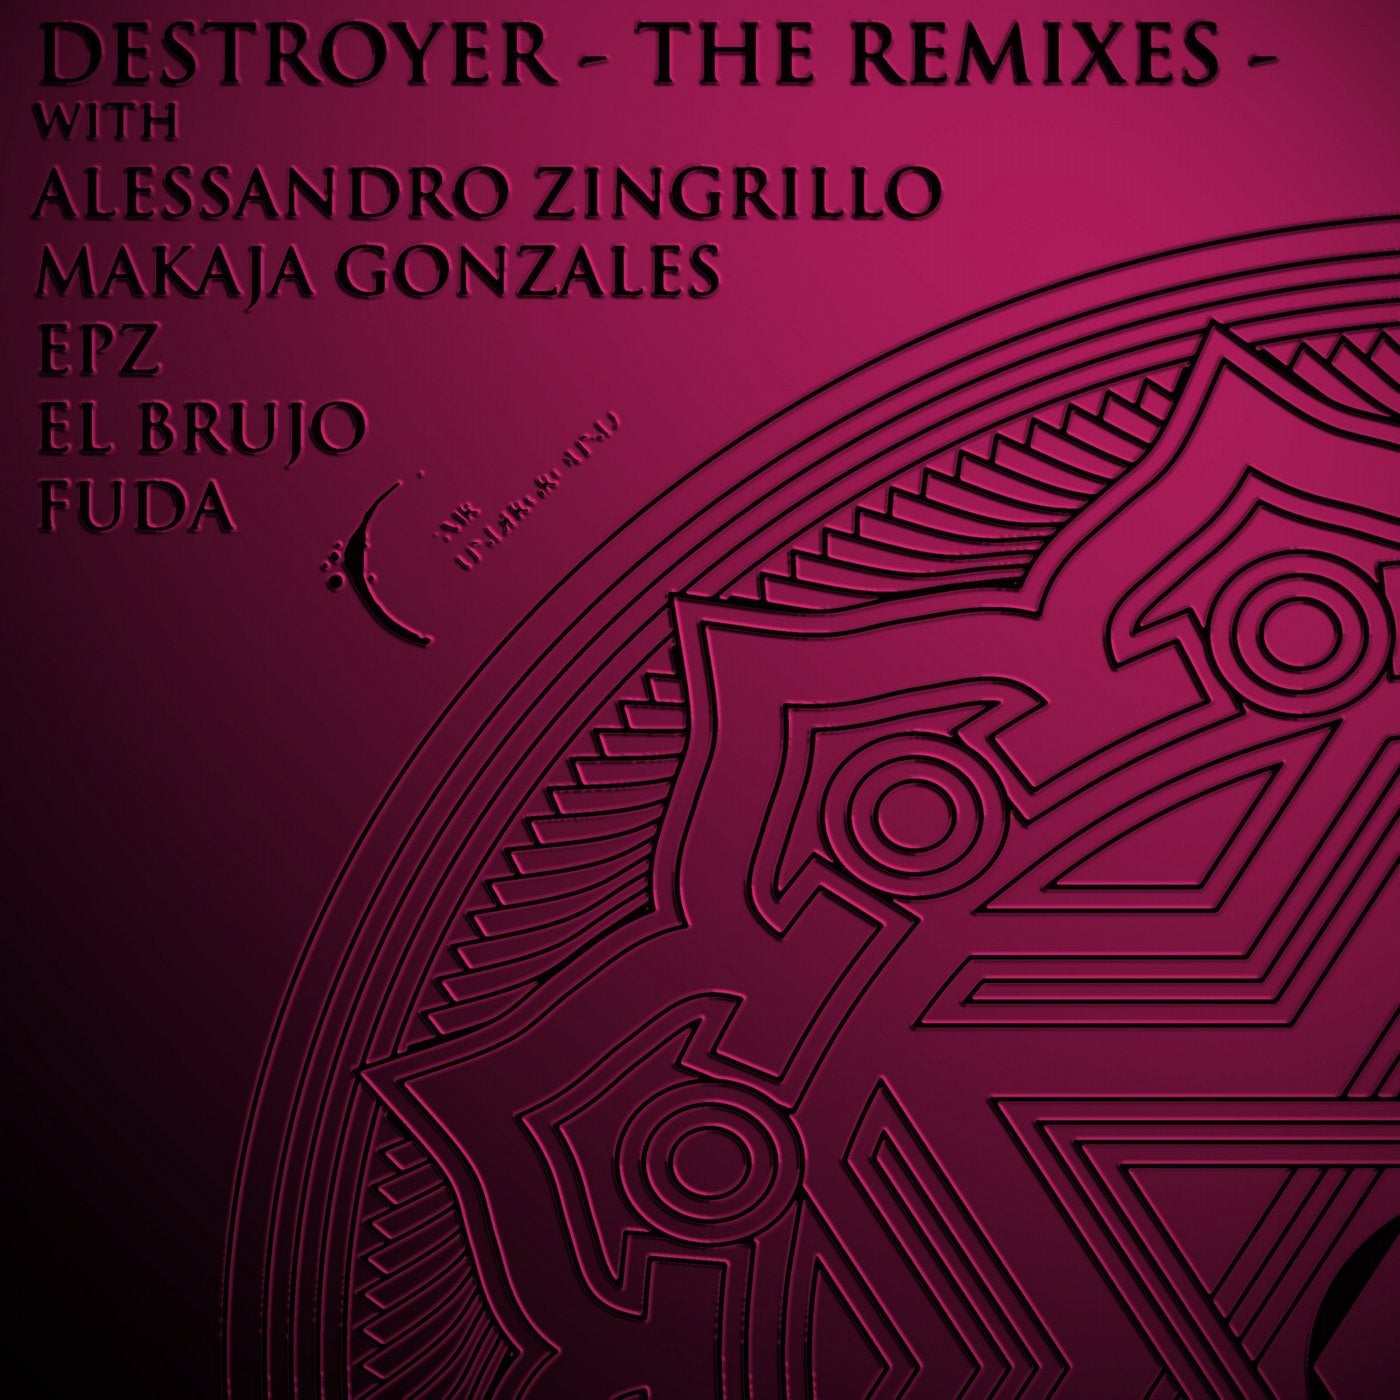 Destroyer -The Remixes -